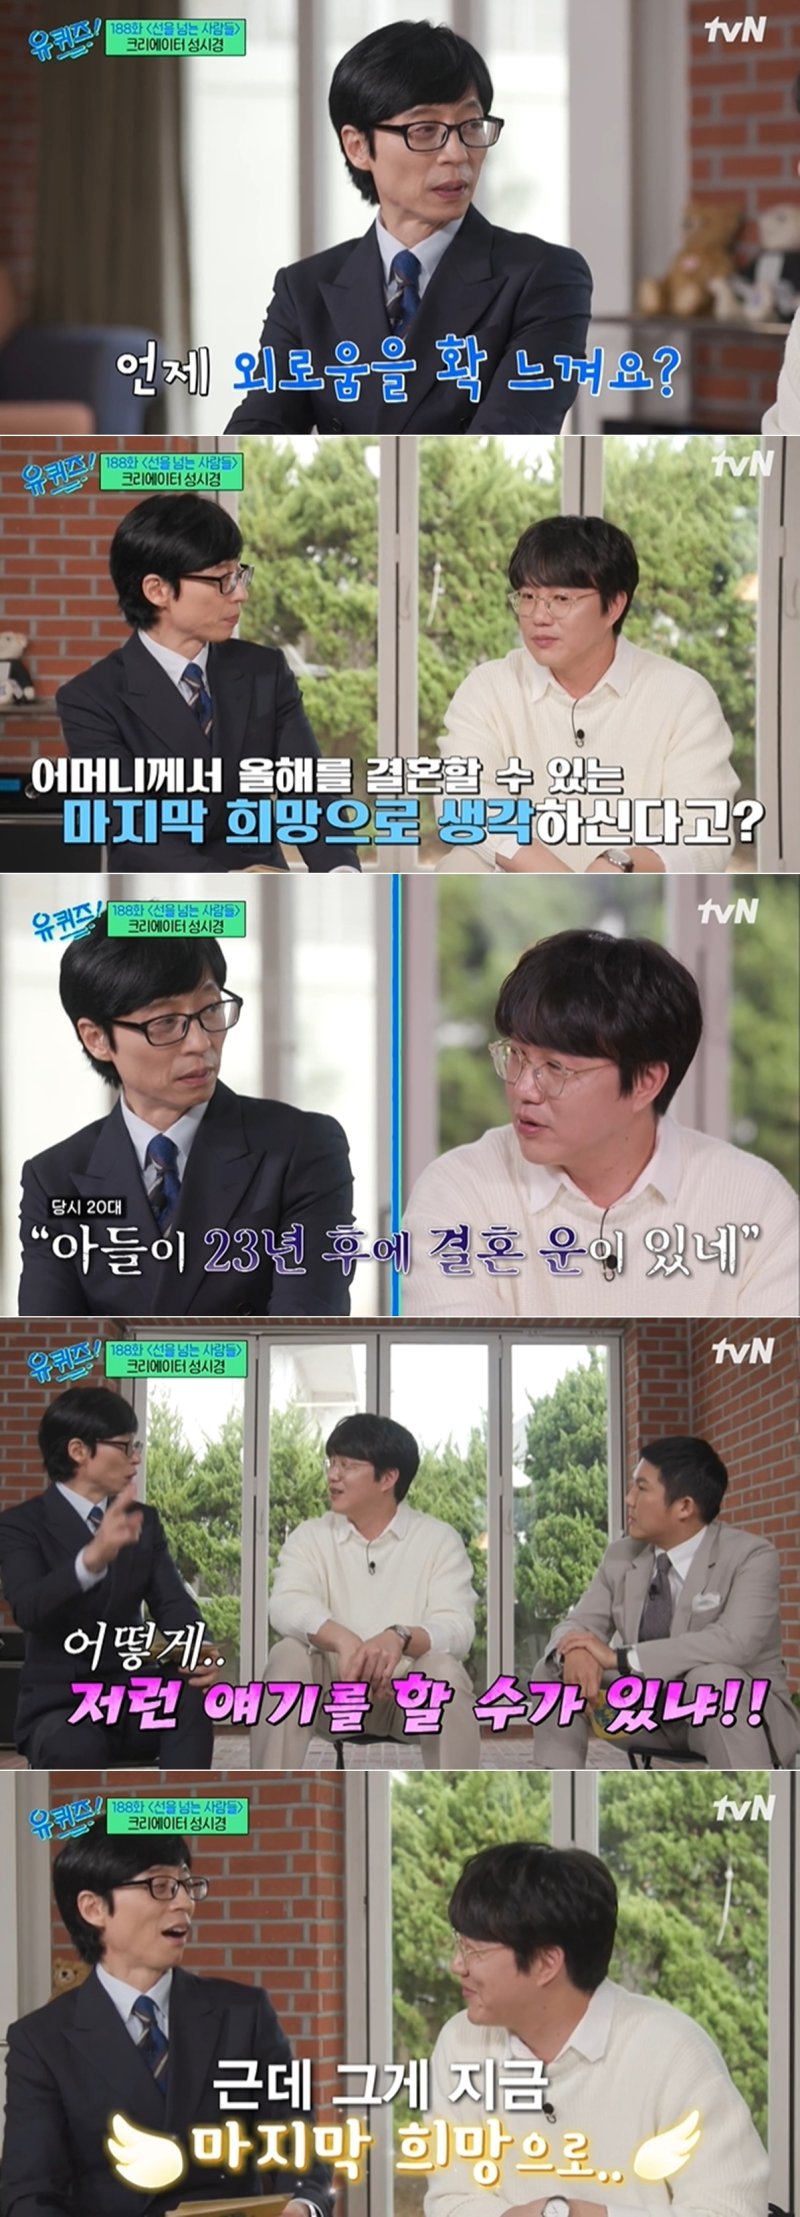 tvN 예능 '유 퀴즈 온 더 블럭' 방송 화면 갈무리